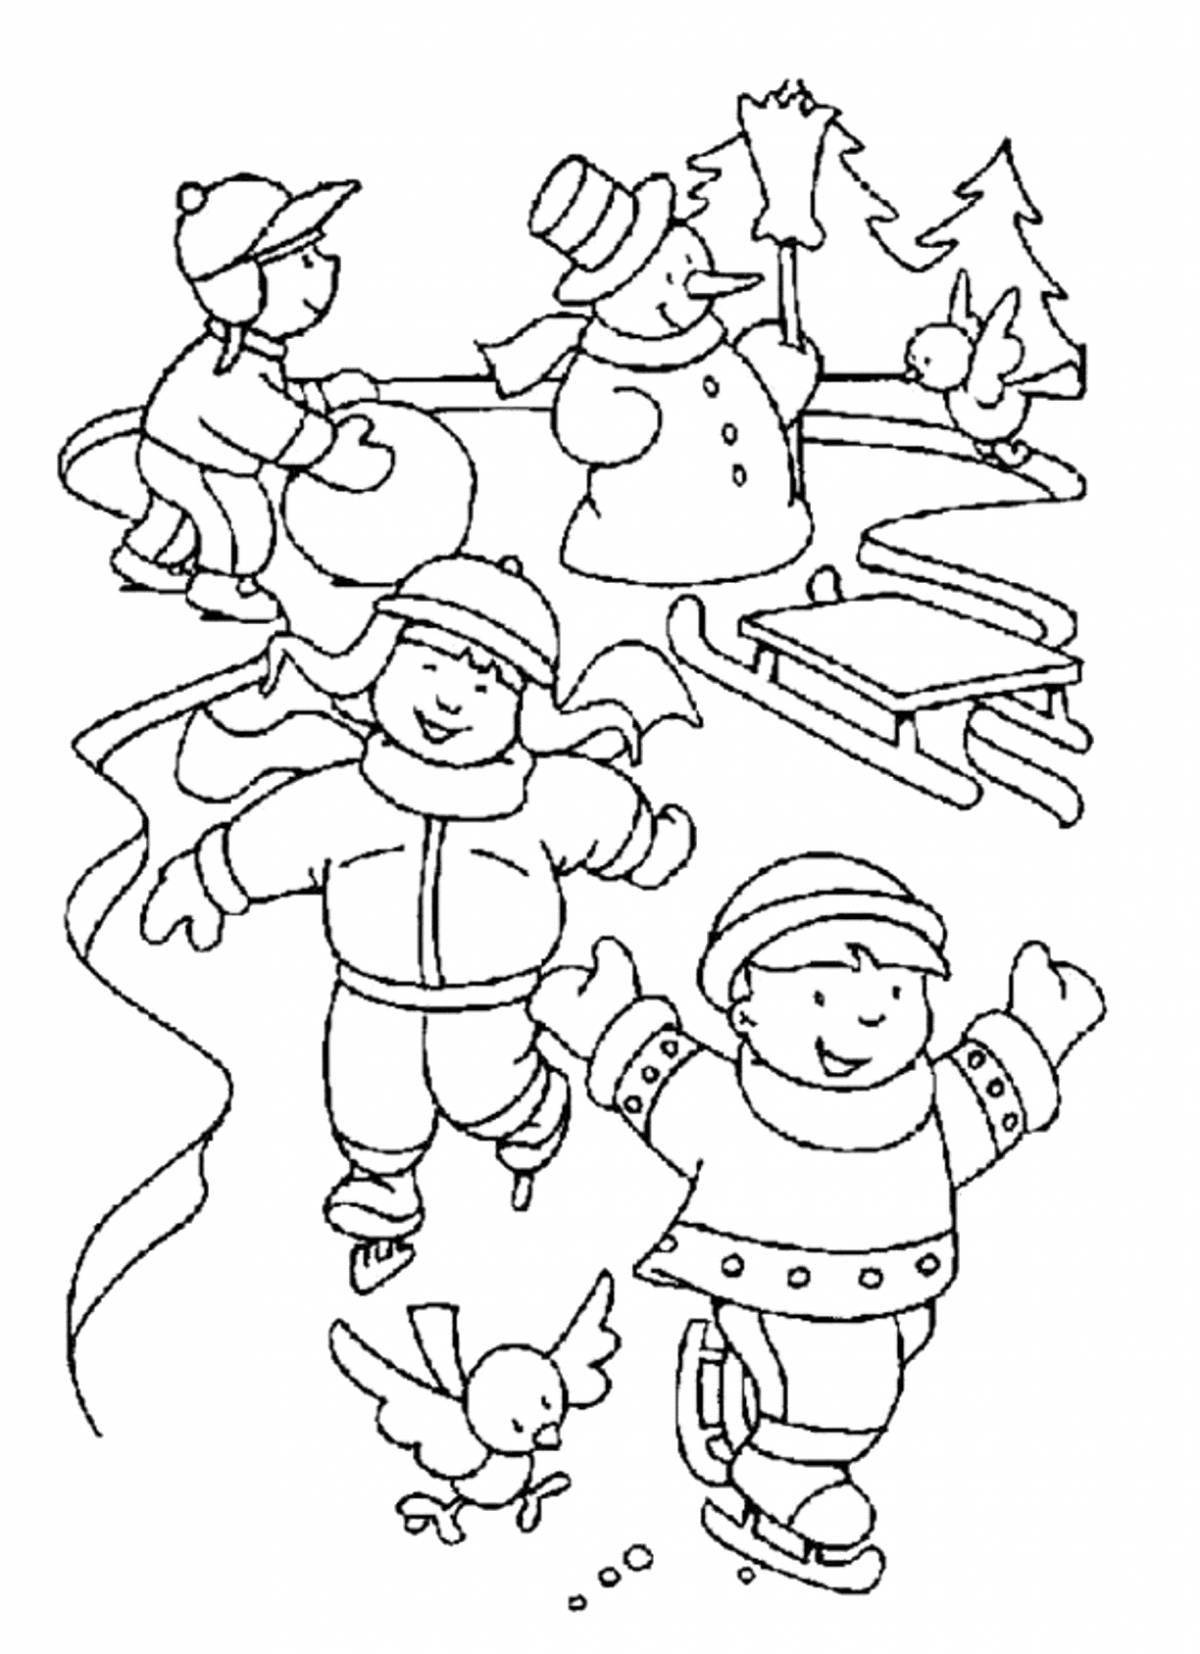 Cheerful winter drawing